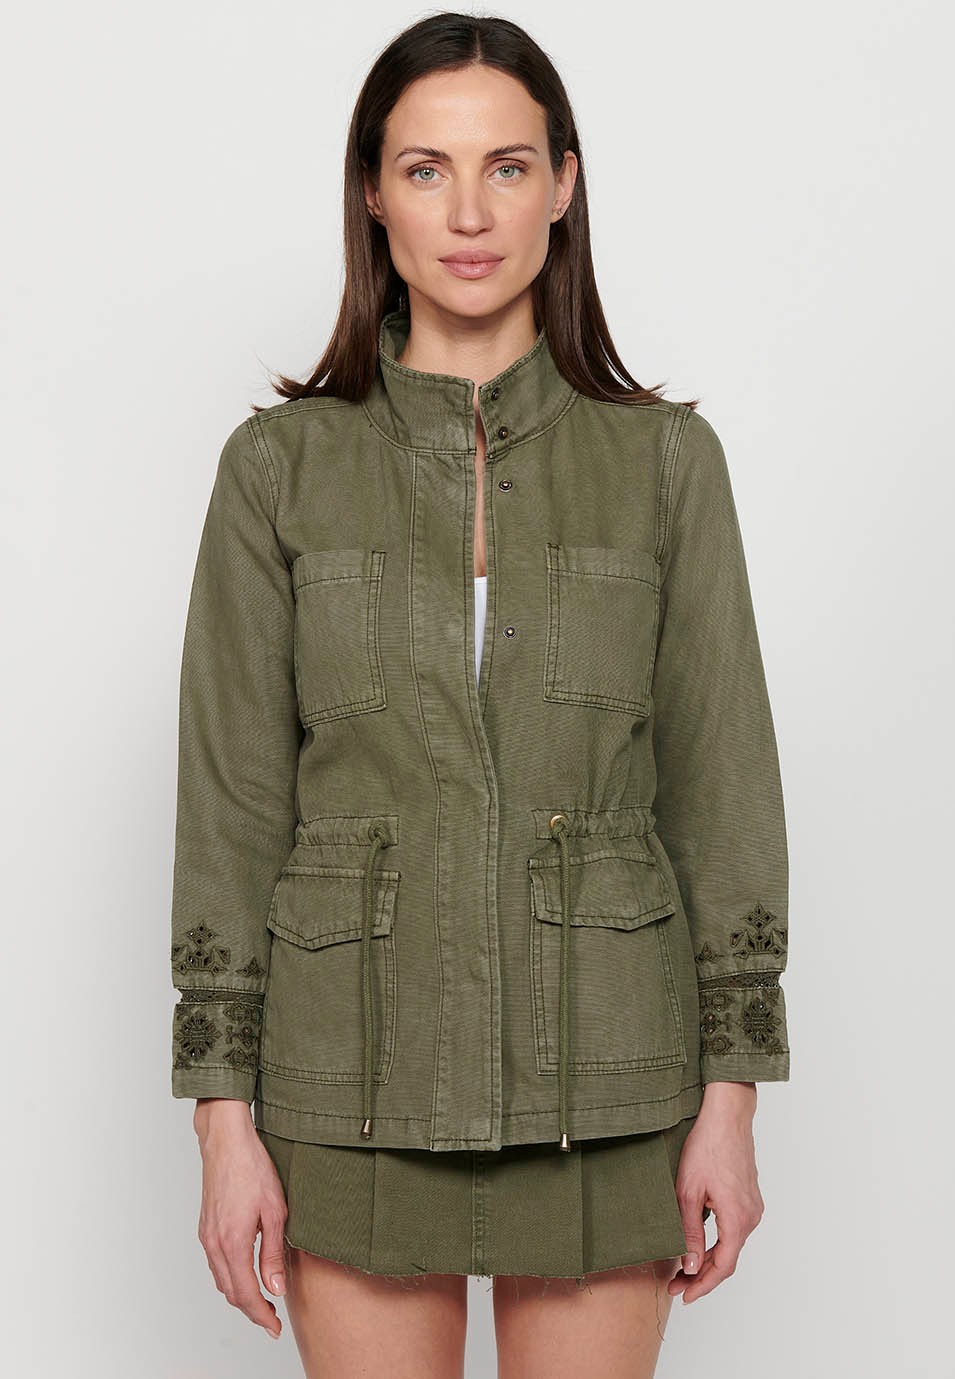 Short parka jacket, front closure, high collar, Khaki color for women